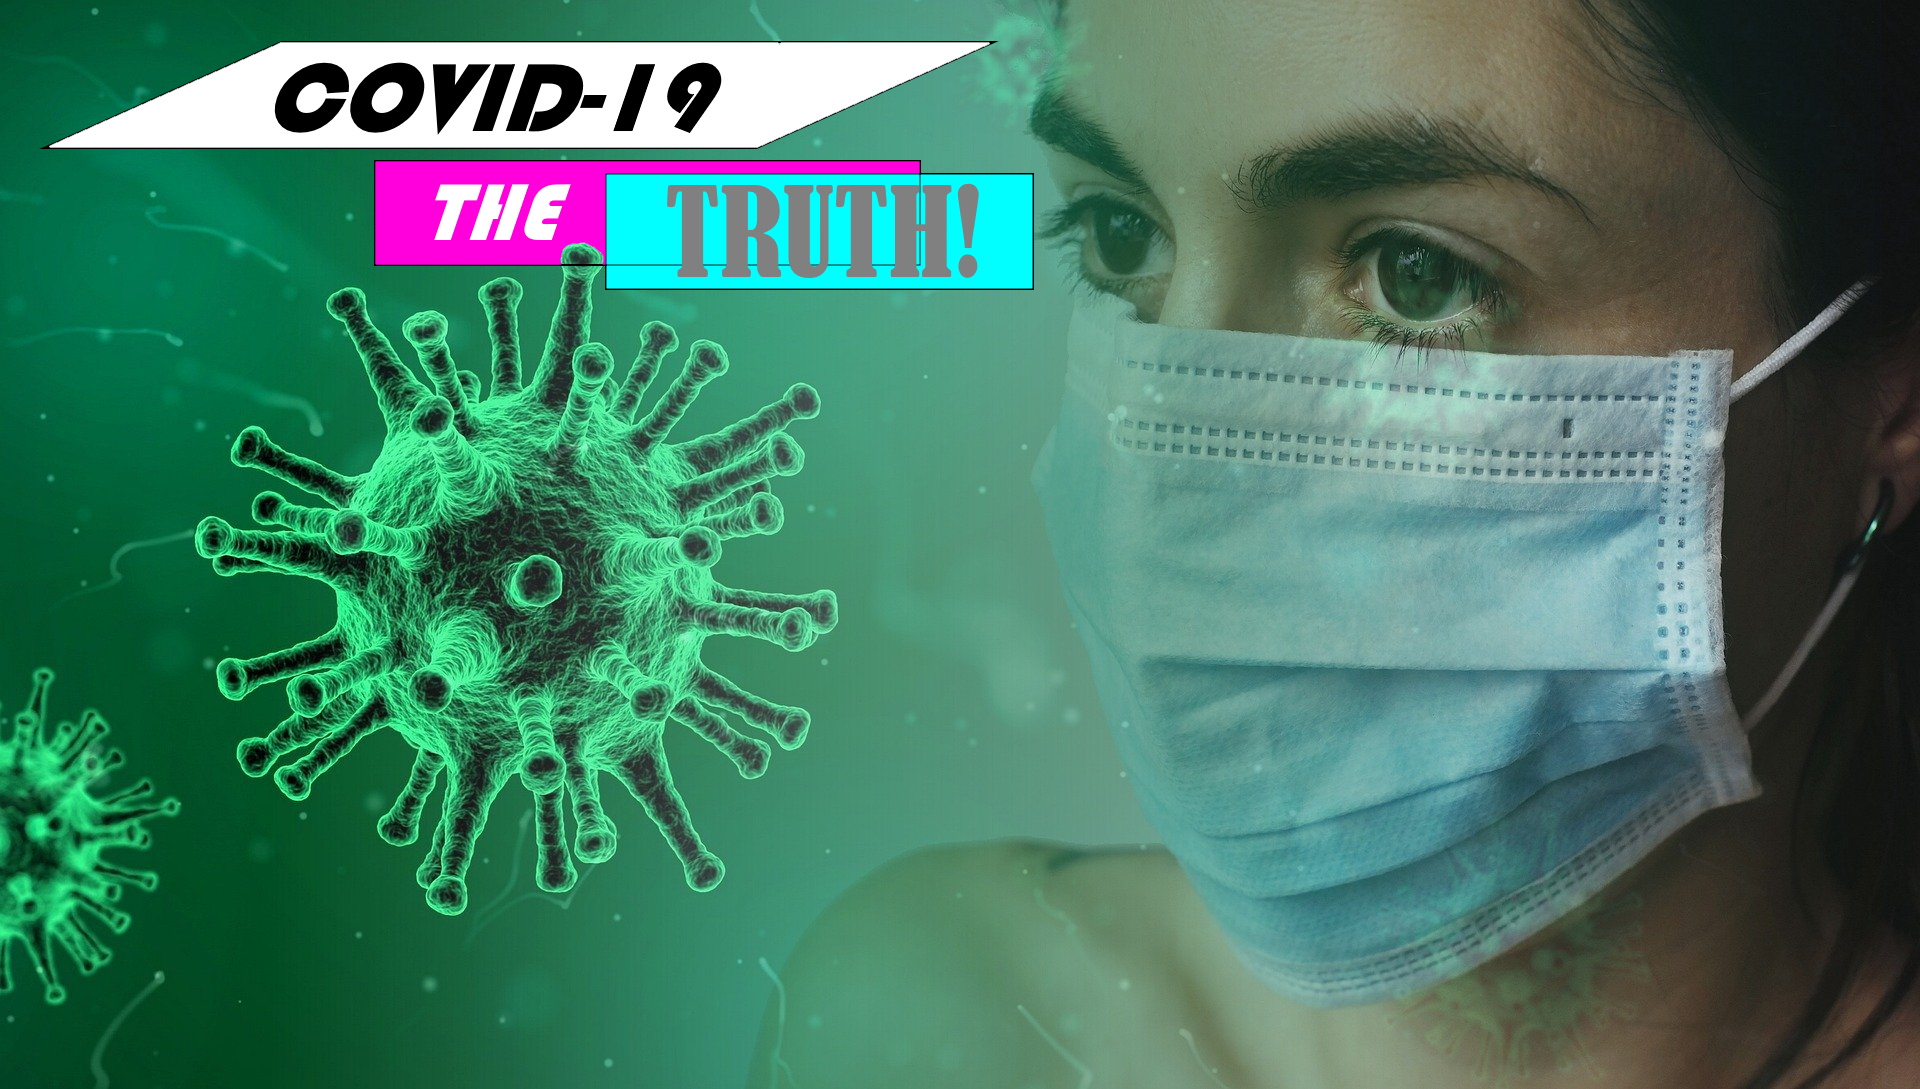 Why Coronavirus [COVID-19] & The Real Truth Behind the Global Panic 2020